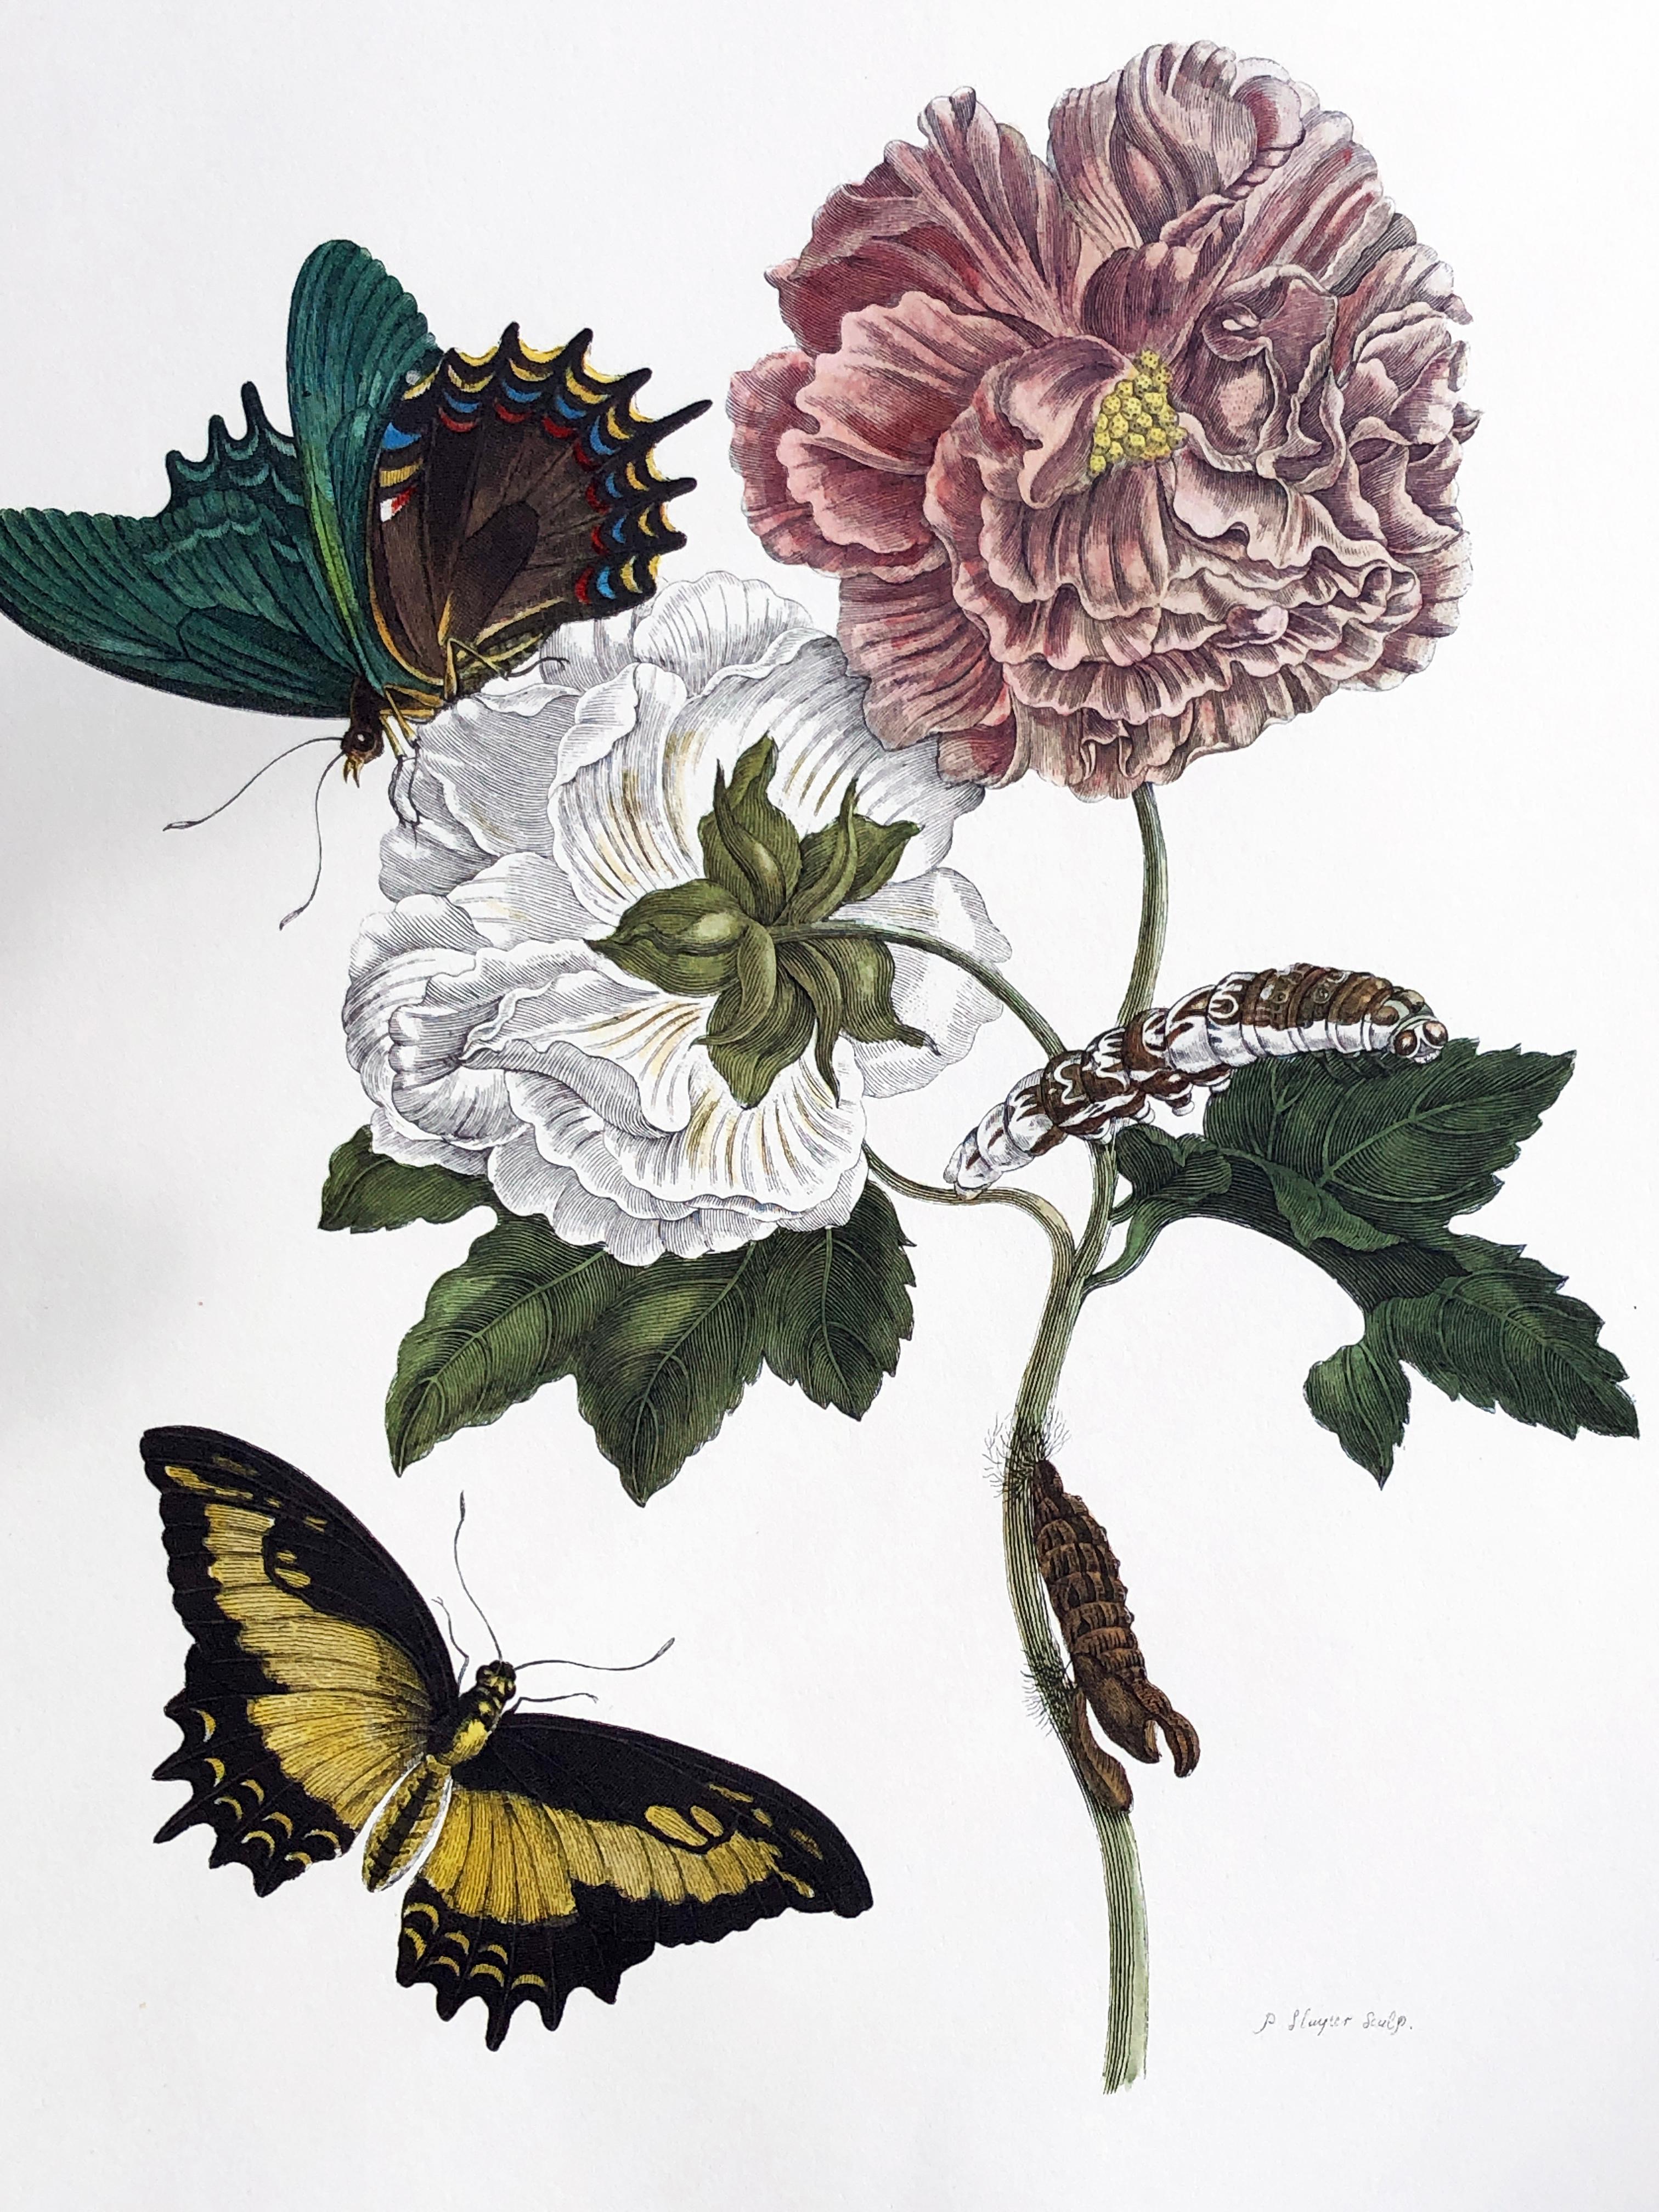 Néerlandais Maria Sibylla Merian - P. Sluyter - Fleurs d'hibiscus et queue de cygne Nr.31 en vente